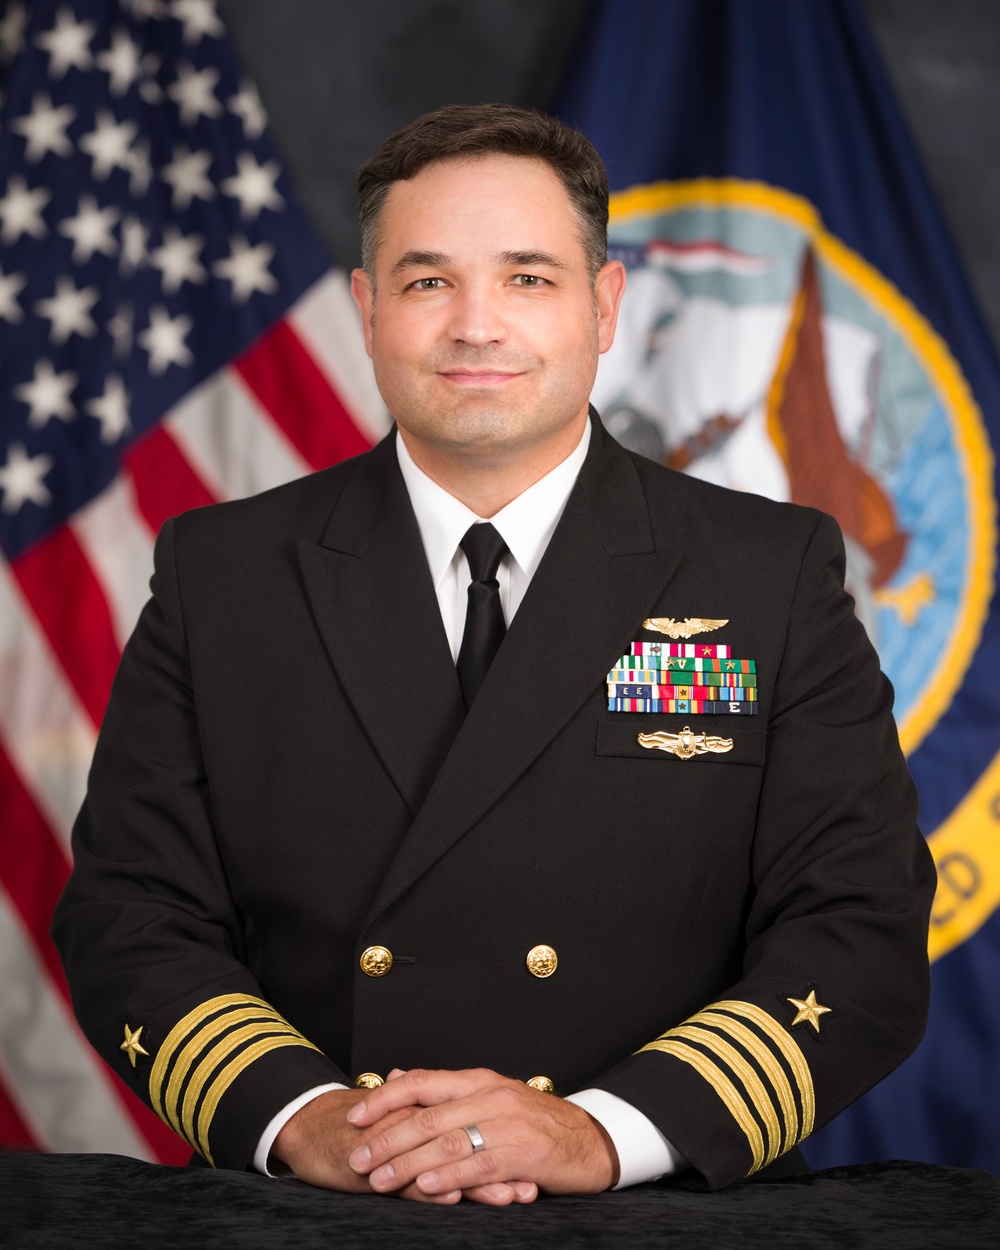 Official portrait, Program Manager, Naval Enterprise Networks Program Office (PMW 205), Space and Naval Warfare Systems Command (SPAWAR), Capt. Michael N. Abreu, US Navy